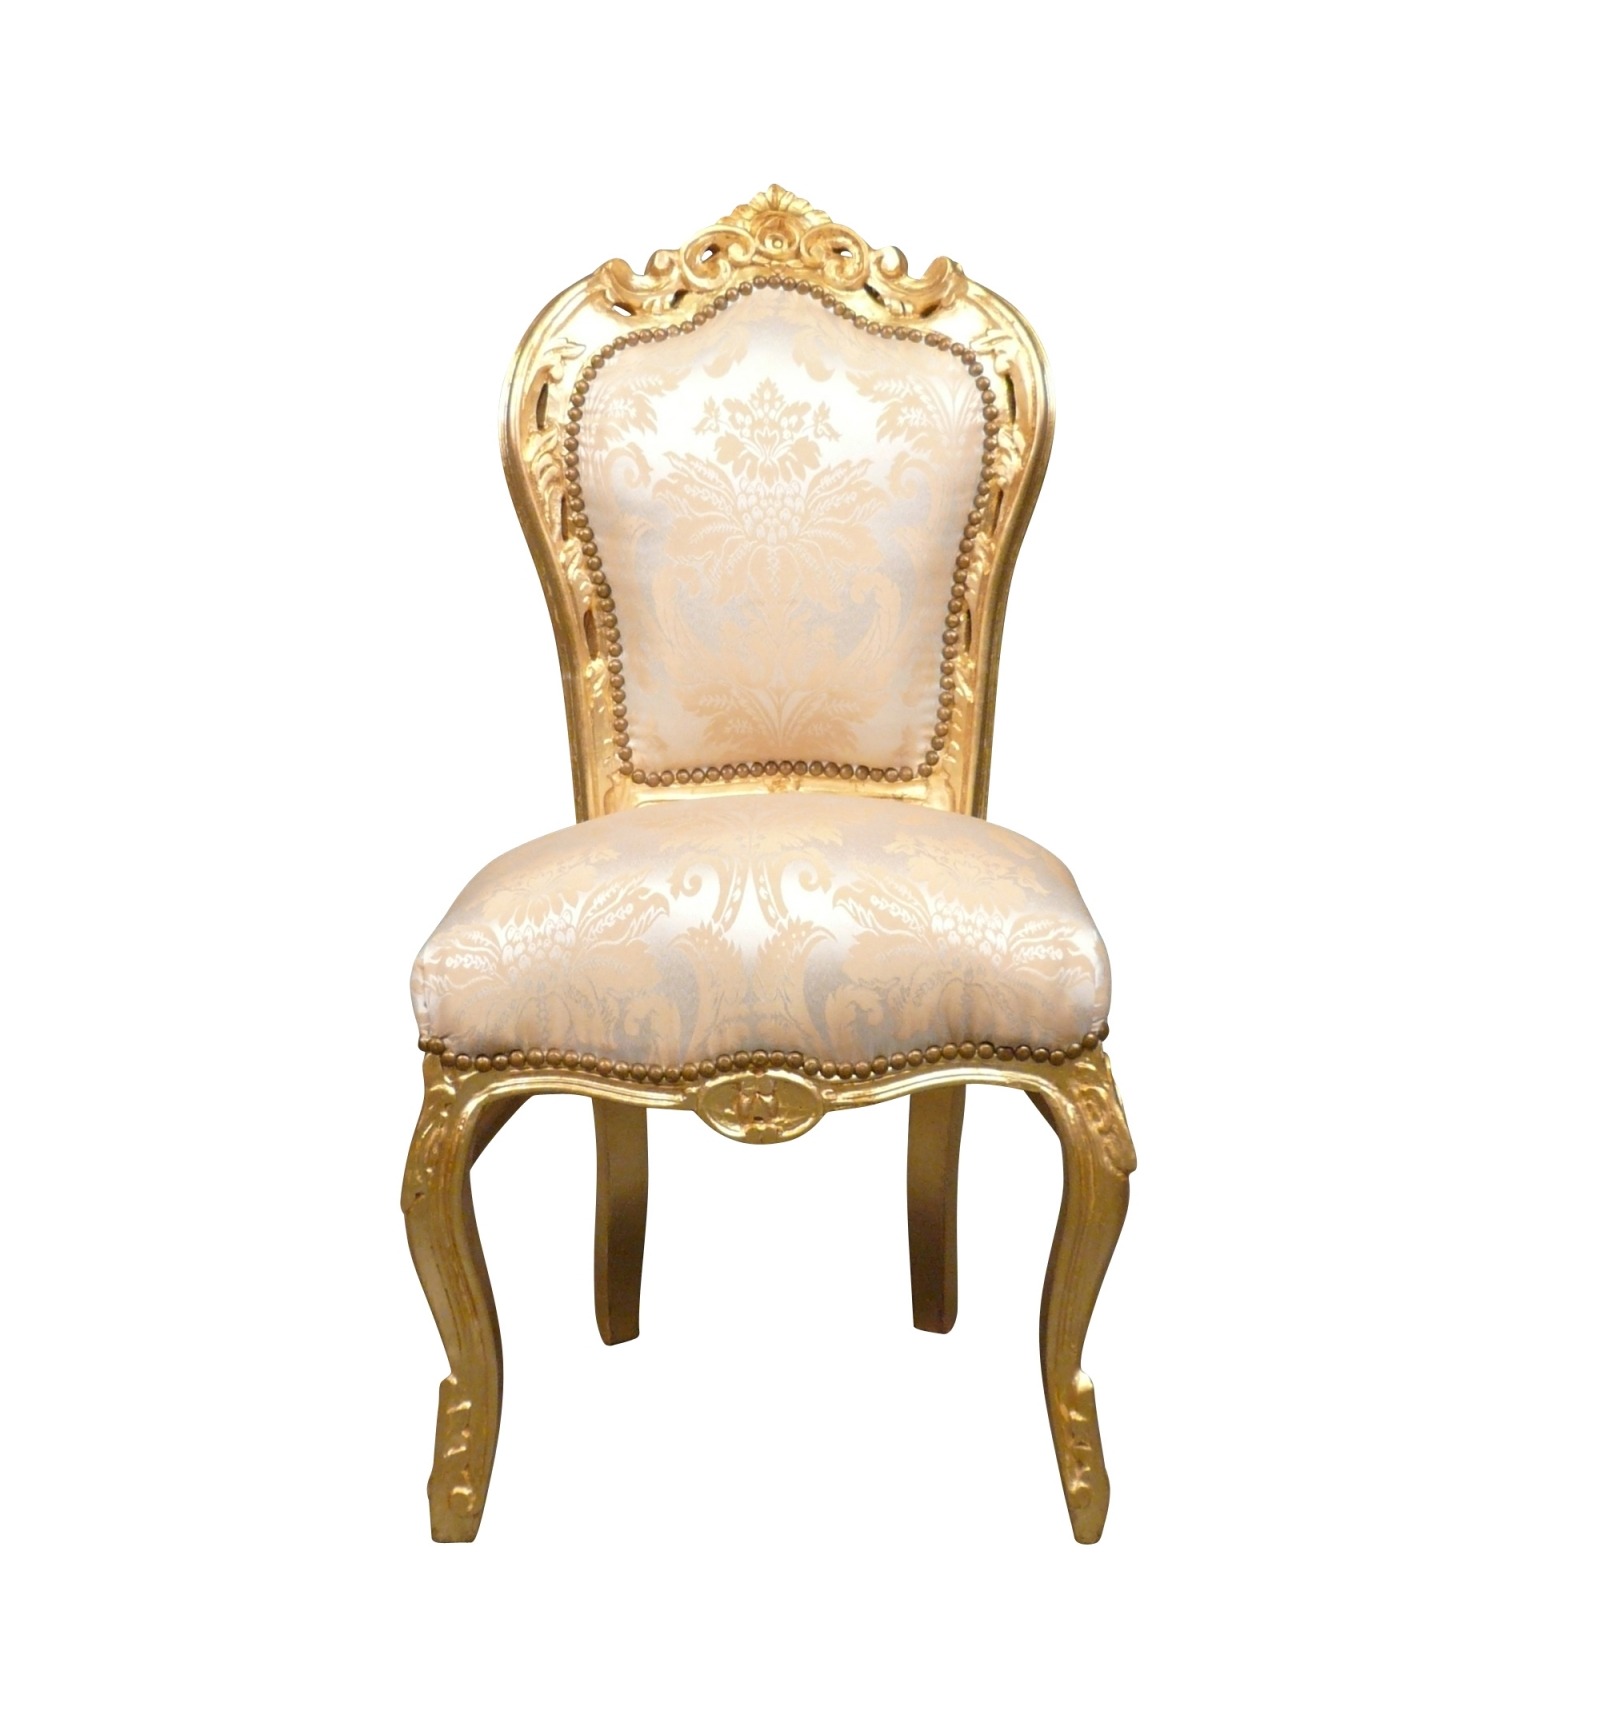 Spuug uit beoefenaar Algebra Baroque chair with iris flower fabric - Baroque furniture